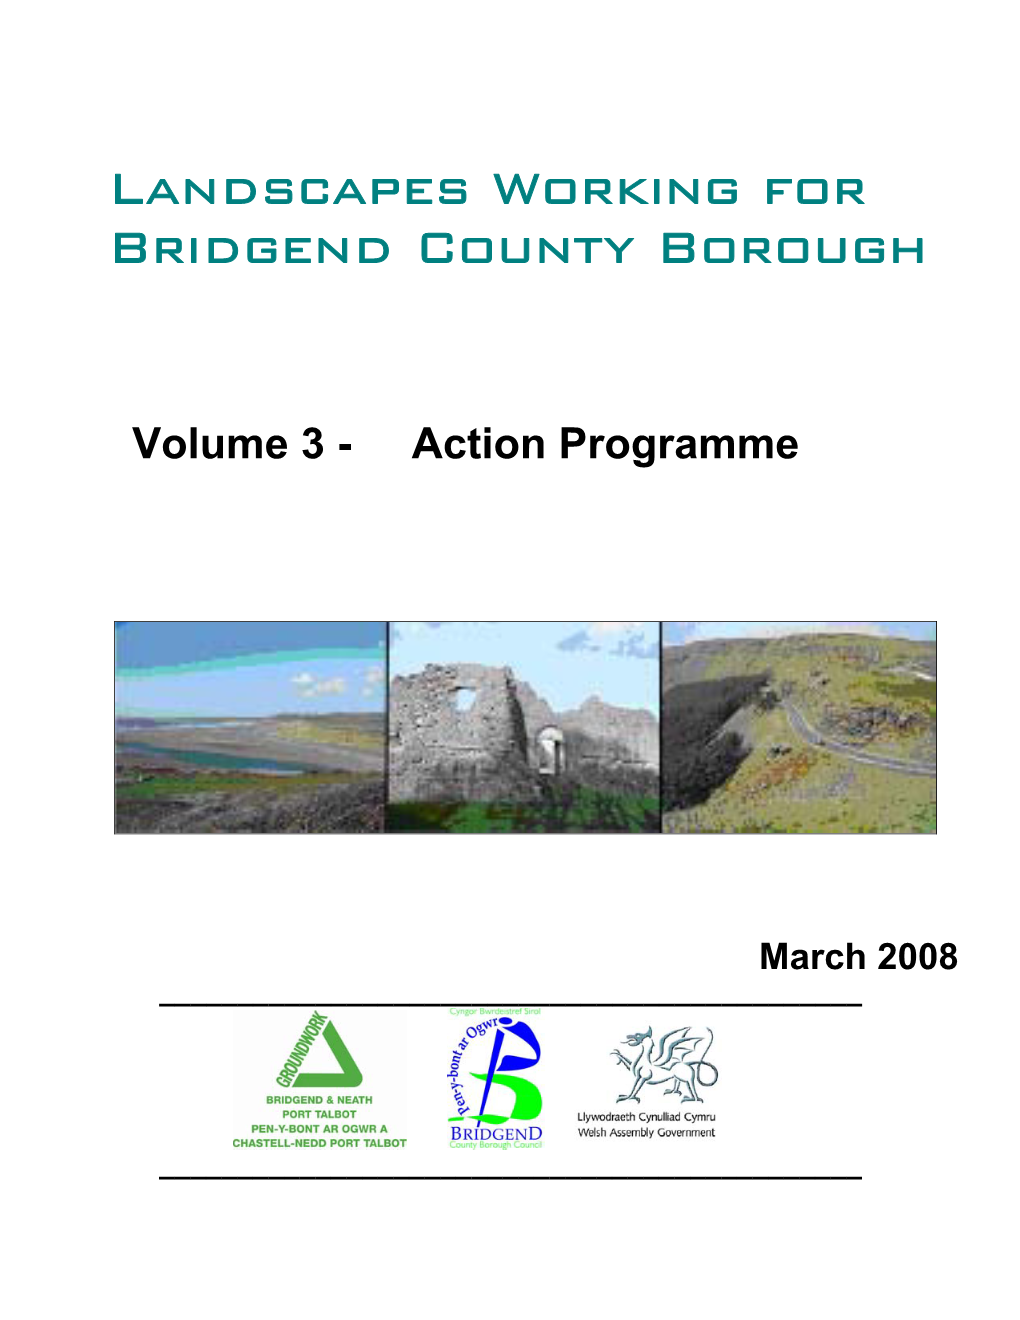 SD92 Landscape Working for Bridgend County Borough Volume